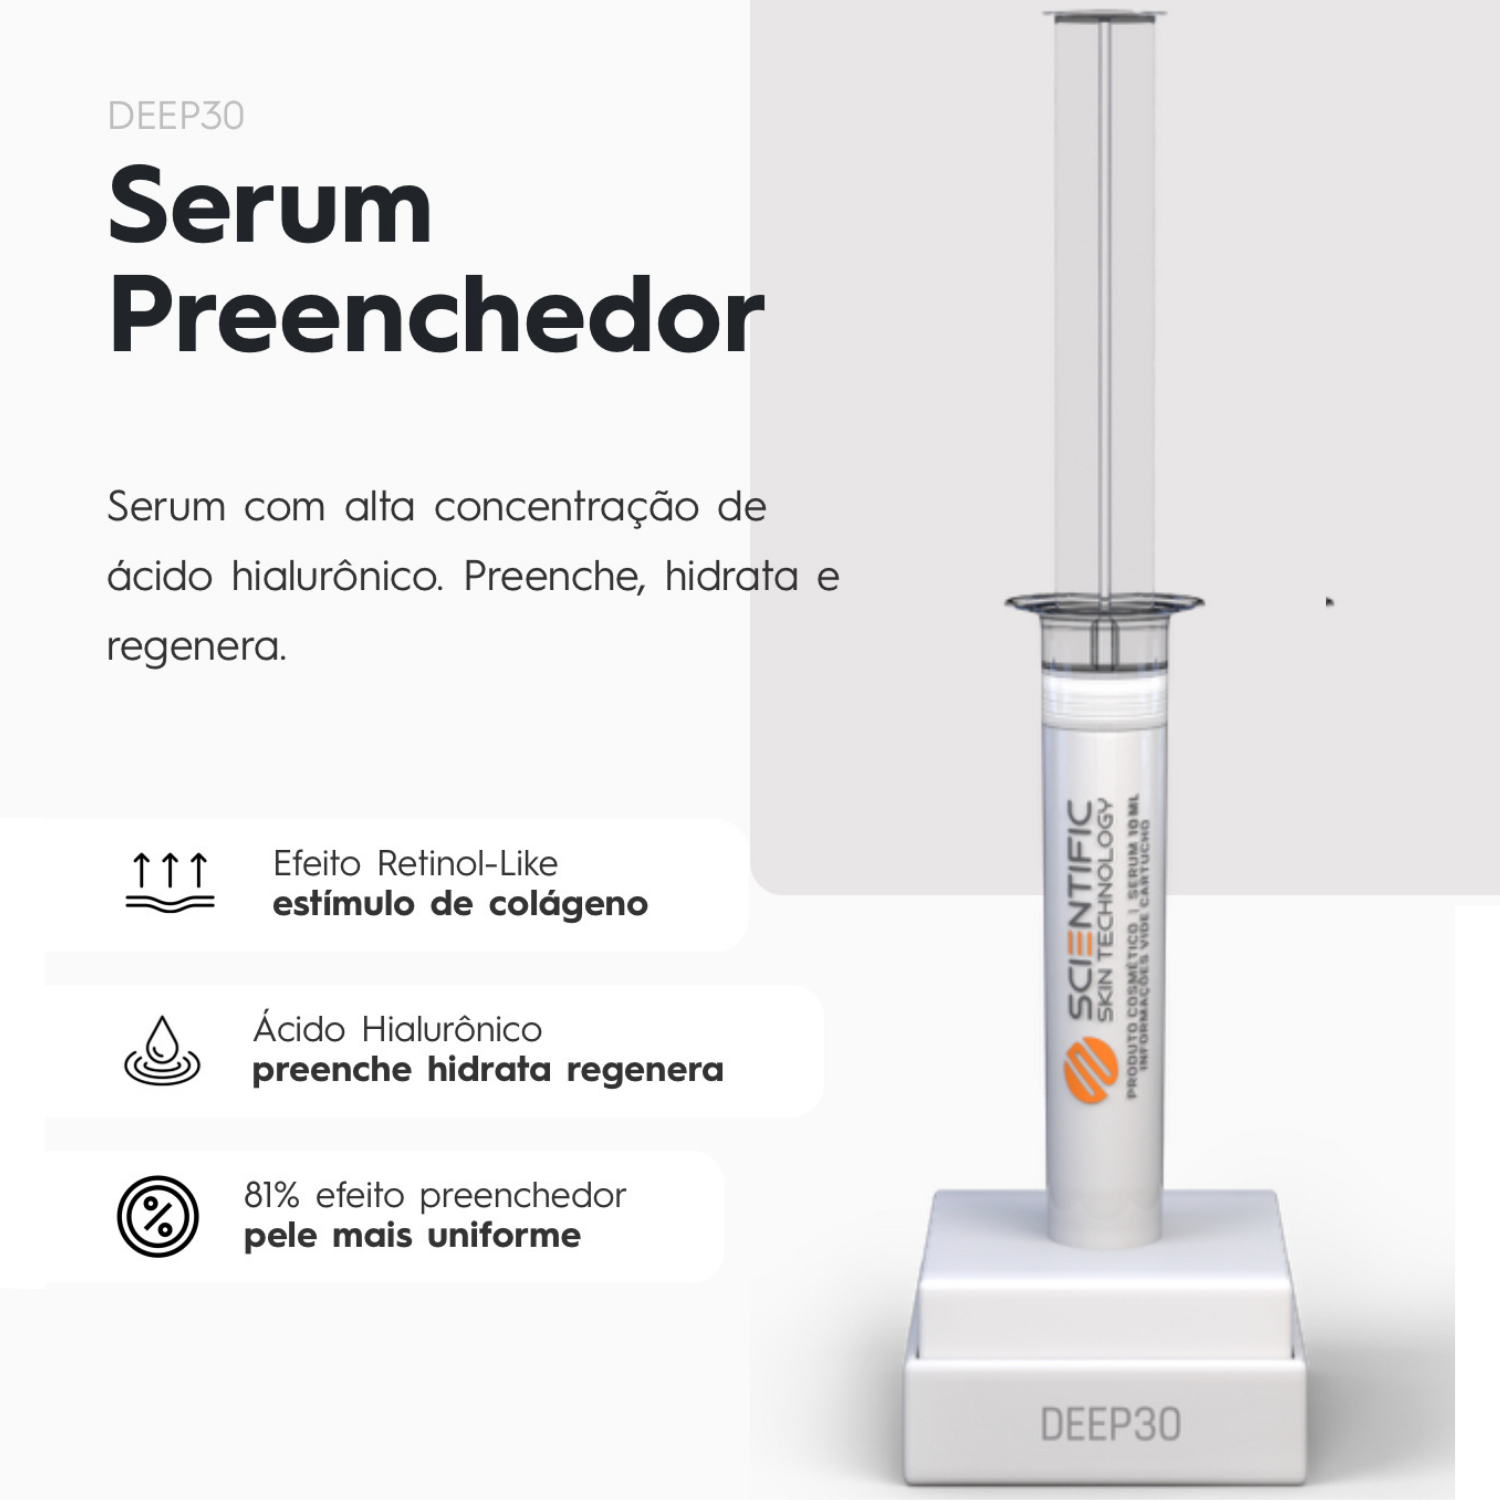 DEEP30 - Sérum Preenchedor - Scientific Skin Technology